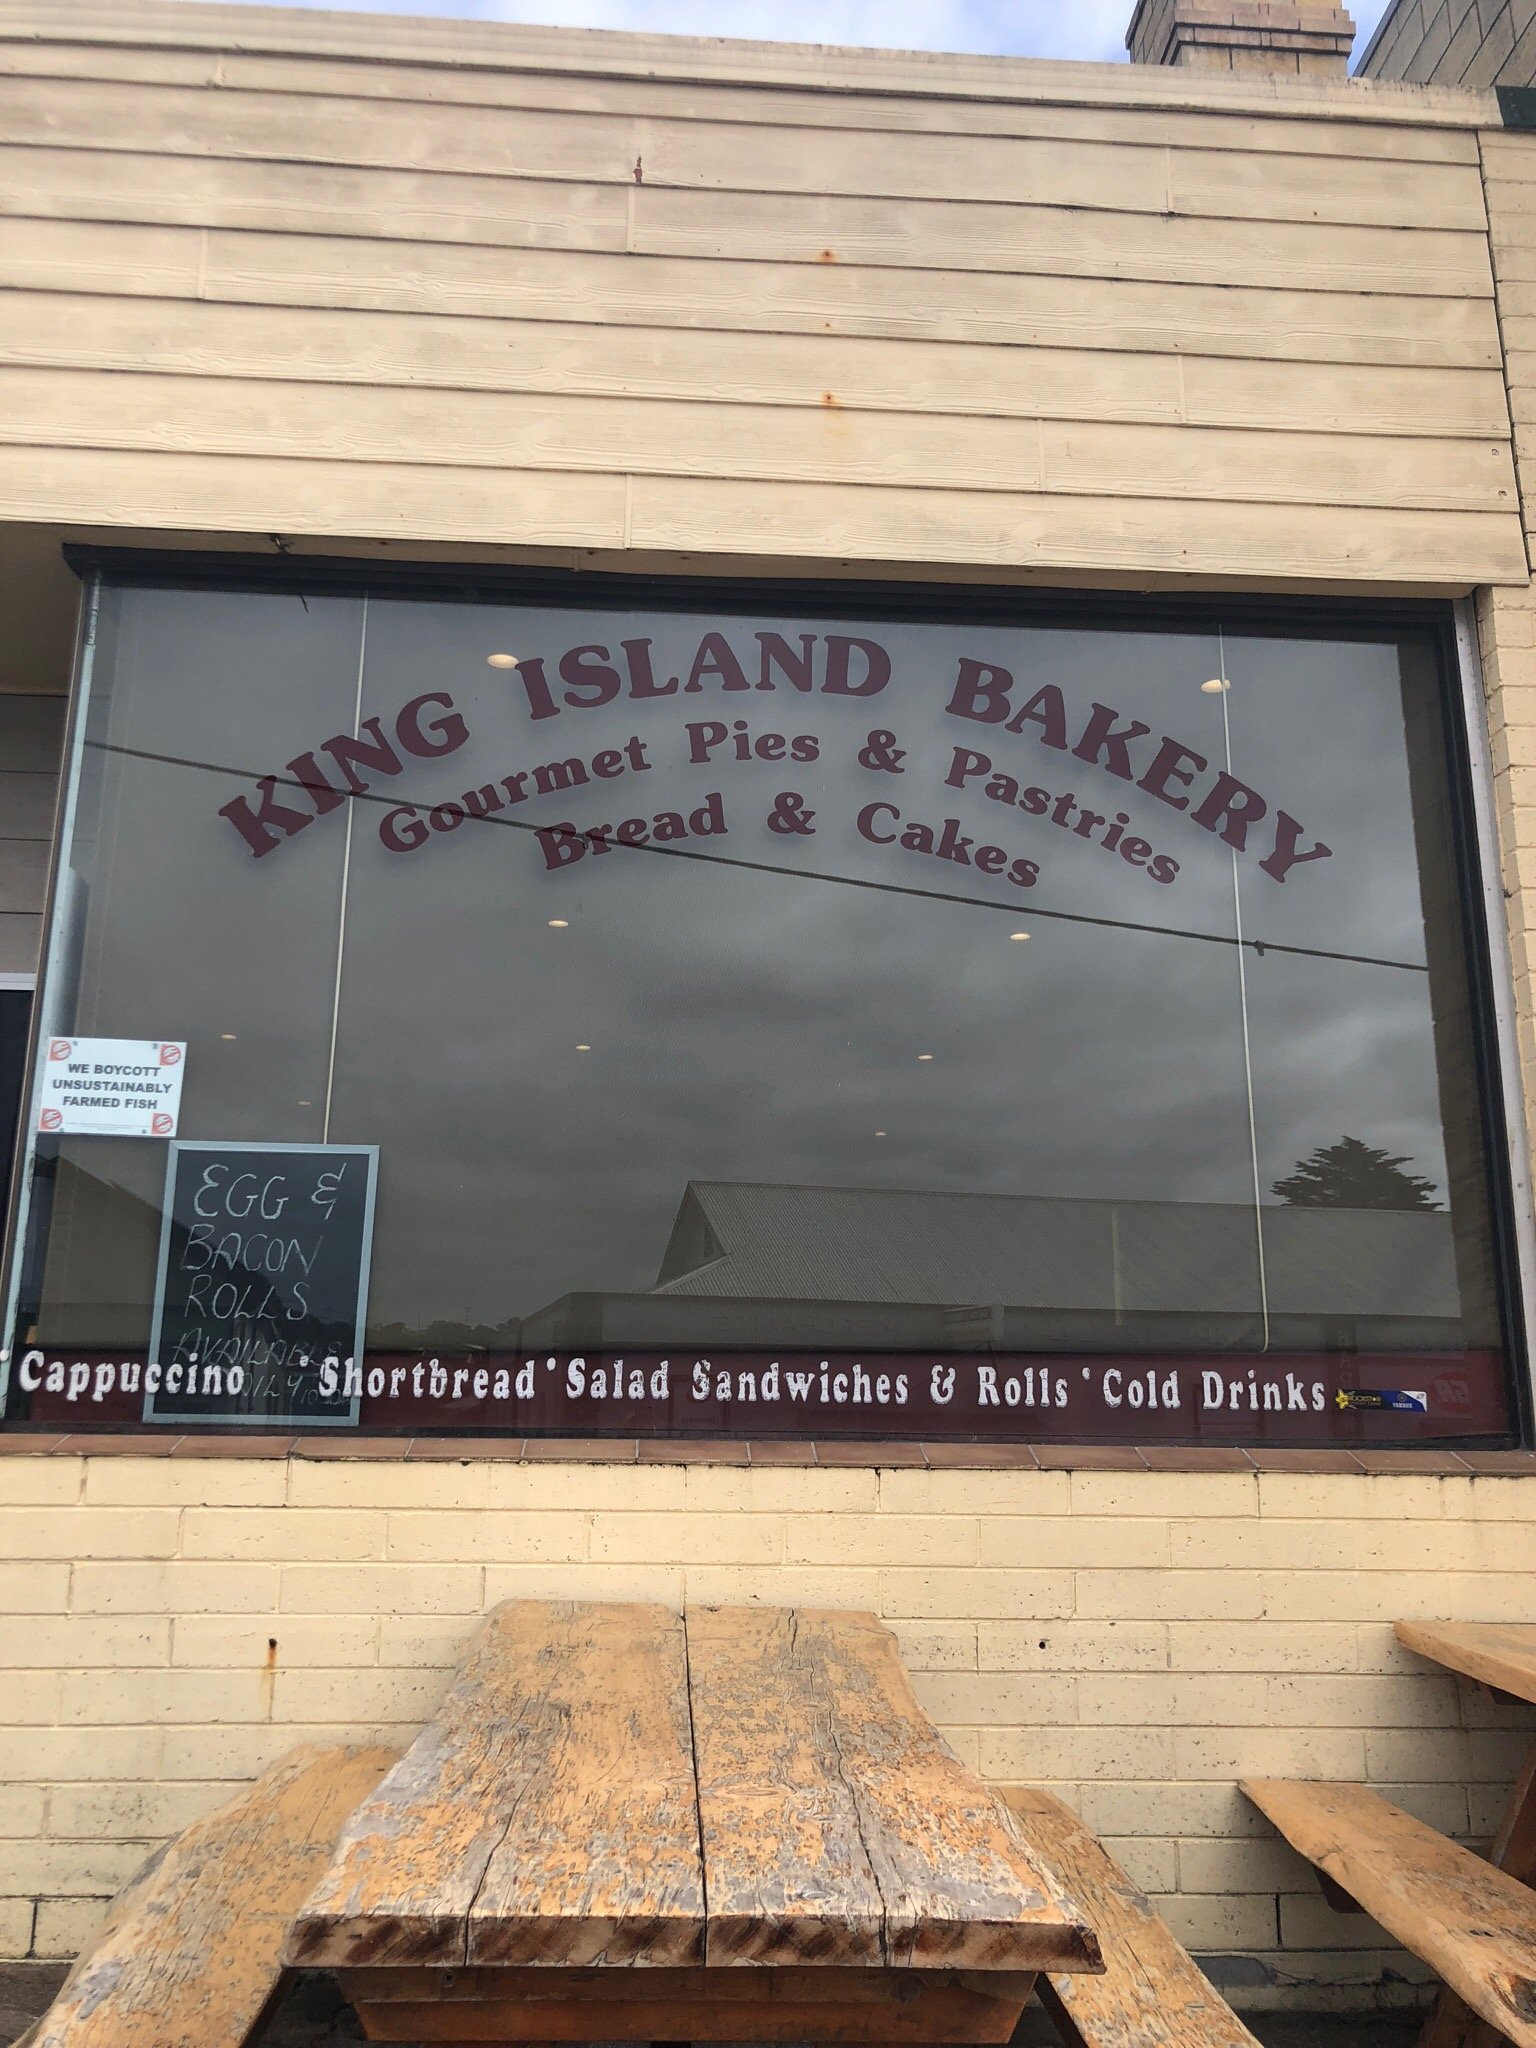 King Island Bakery - Restaurants Sydney 1